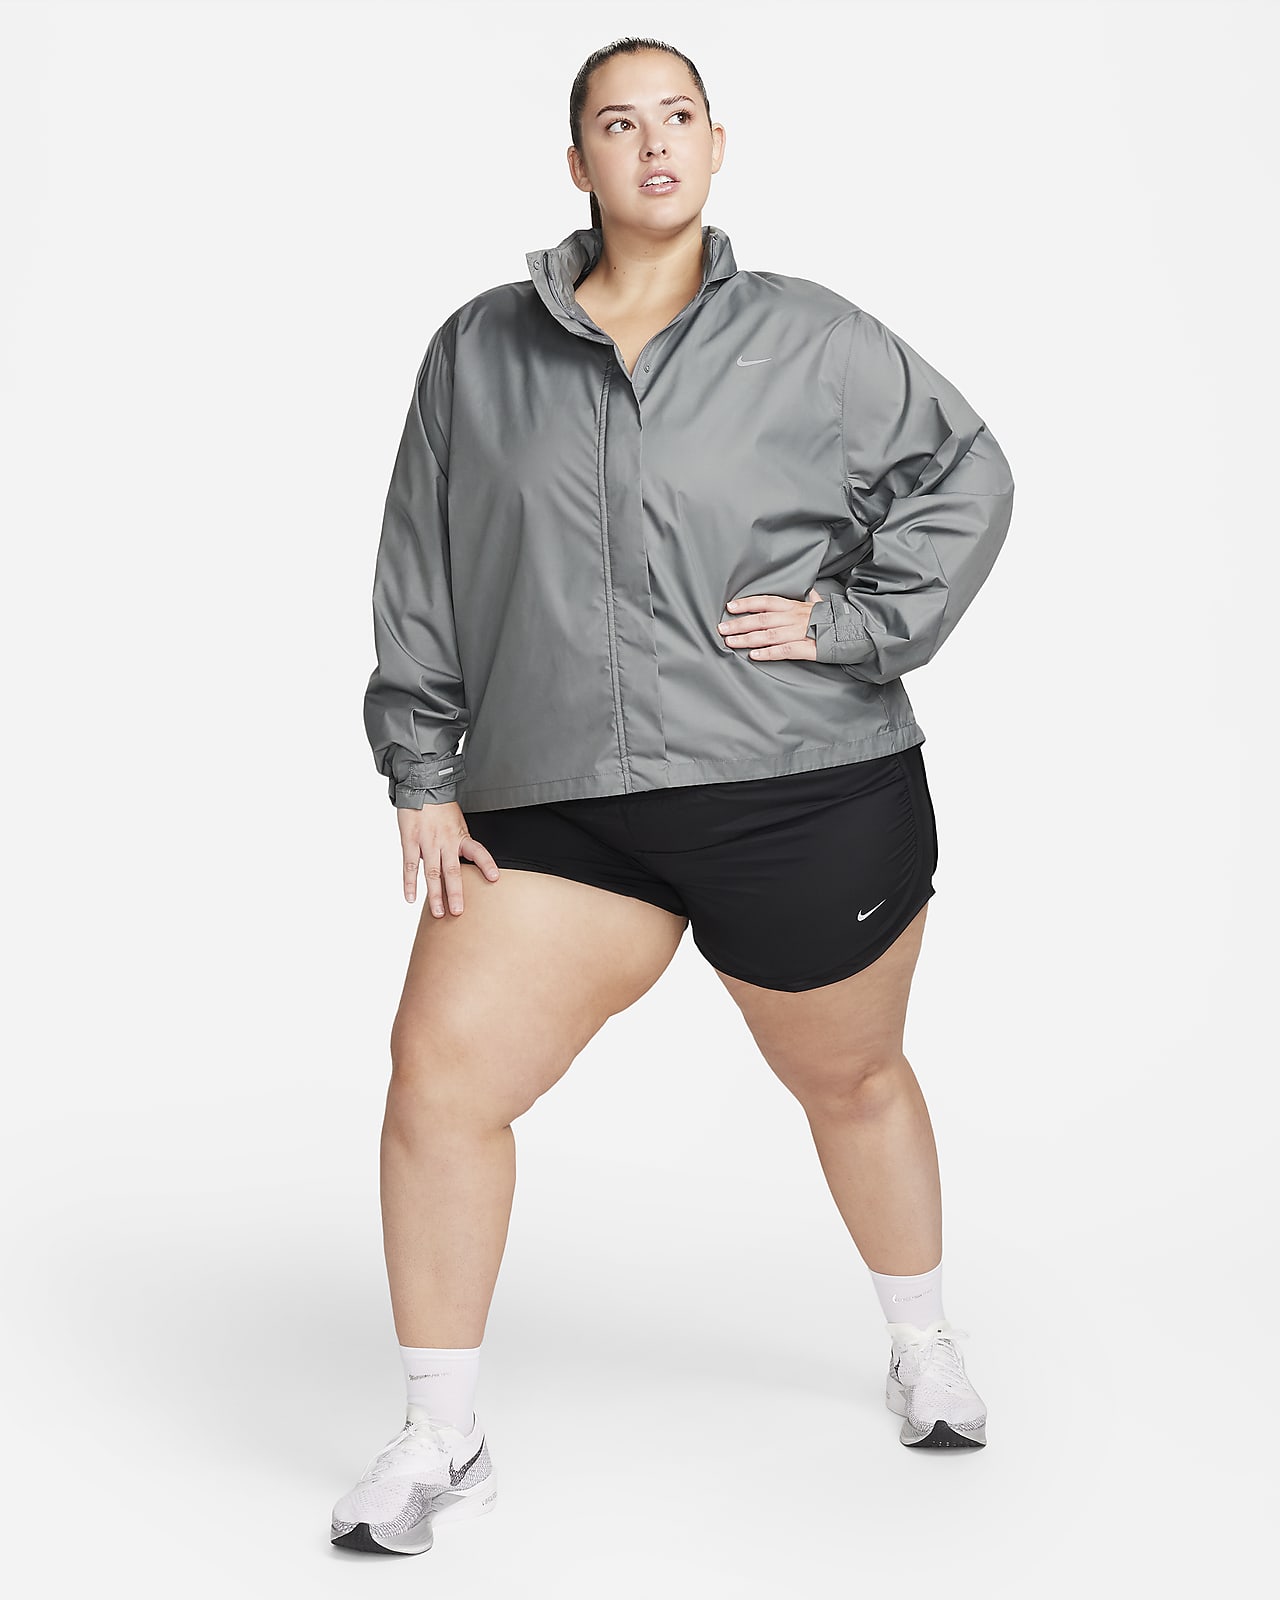 Nike Jacket (Plus Fast Repel Women\'s Size). Running